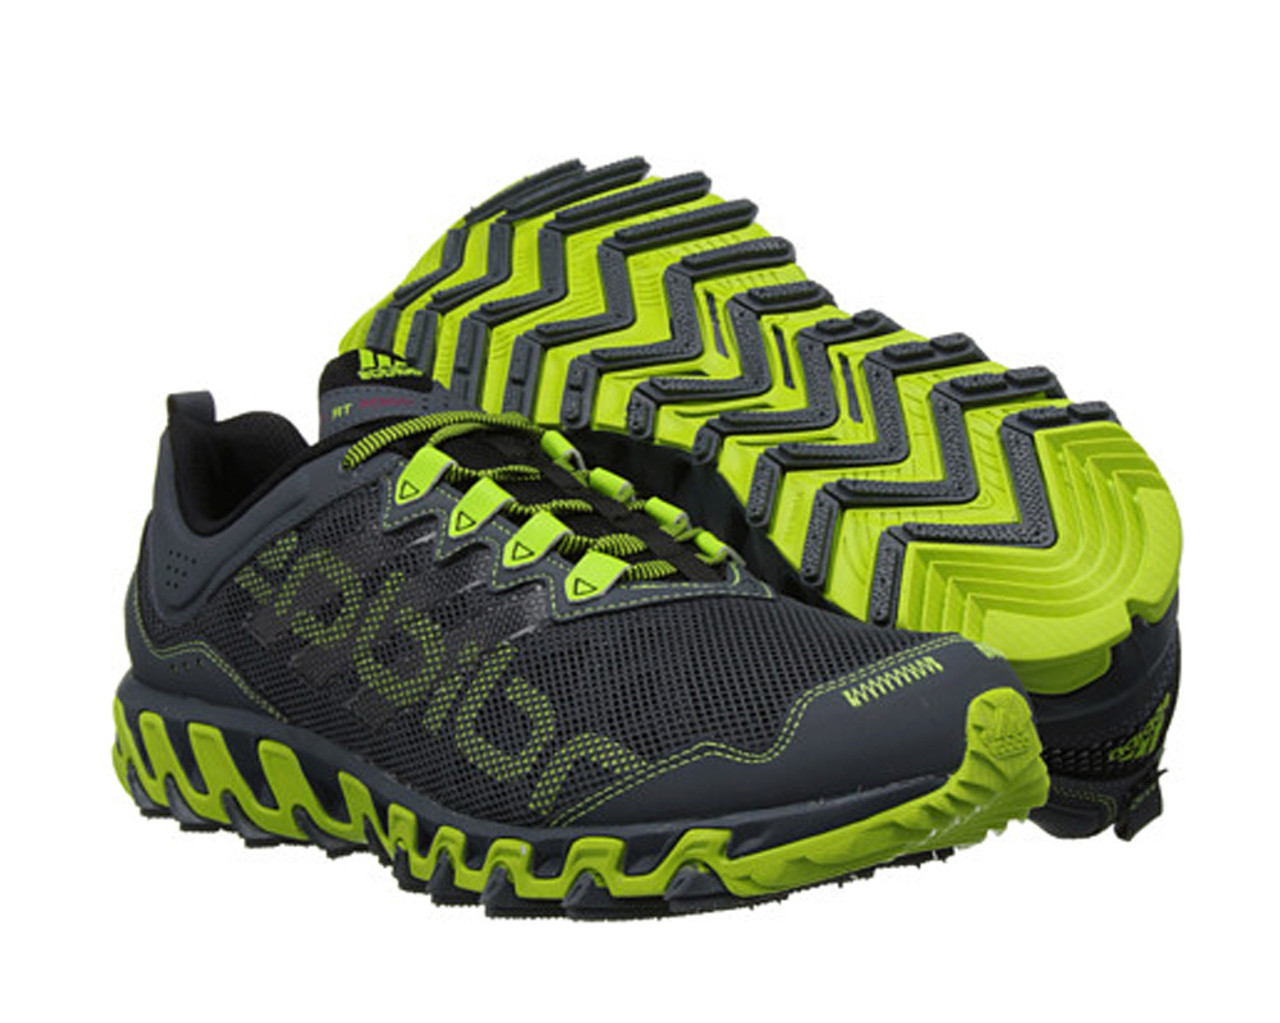 Adidas Men's Vigor 4 TR Running Shoes - Grey | Discount Adidas Men's  Athletic Shoes & More - Shoolu.com | Shoolu.com